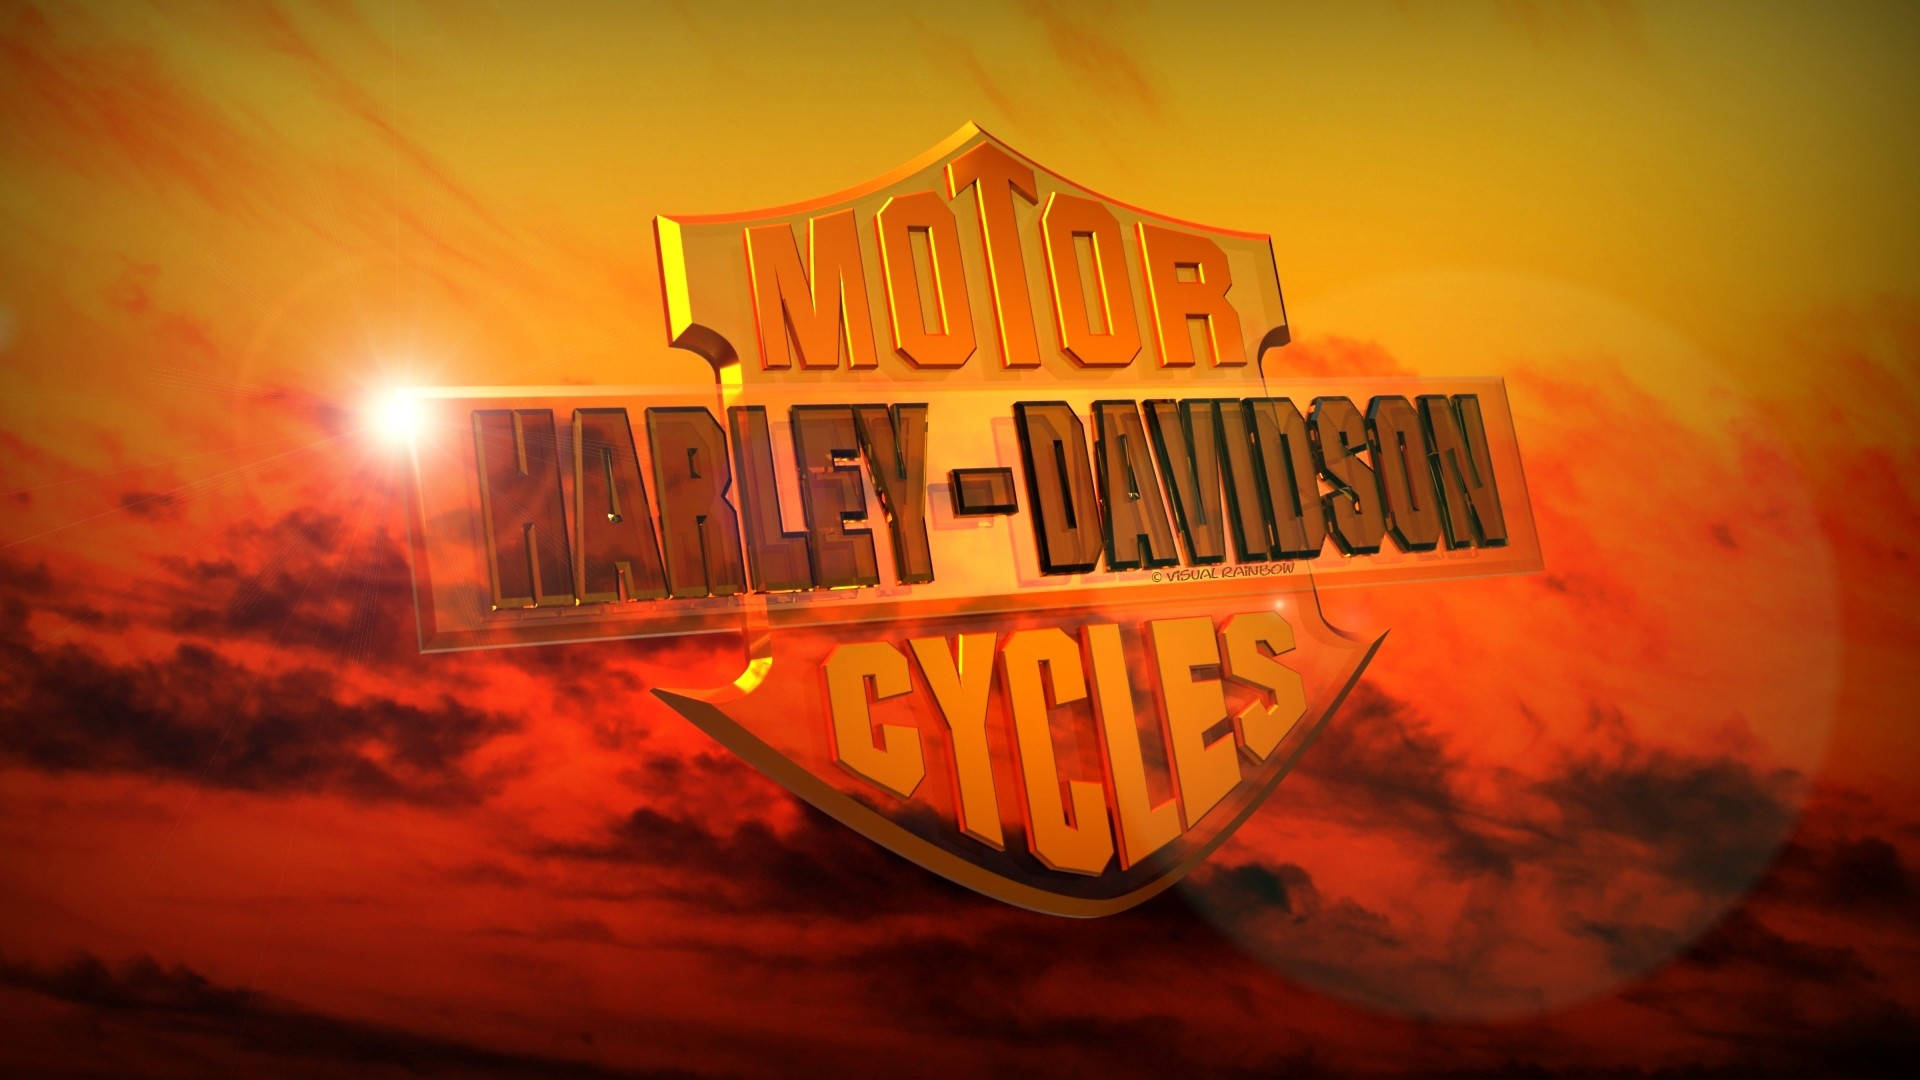 Harley Davidson Logo Sunset Art Wallpaper